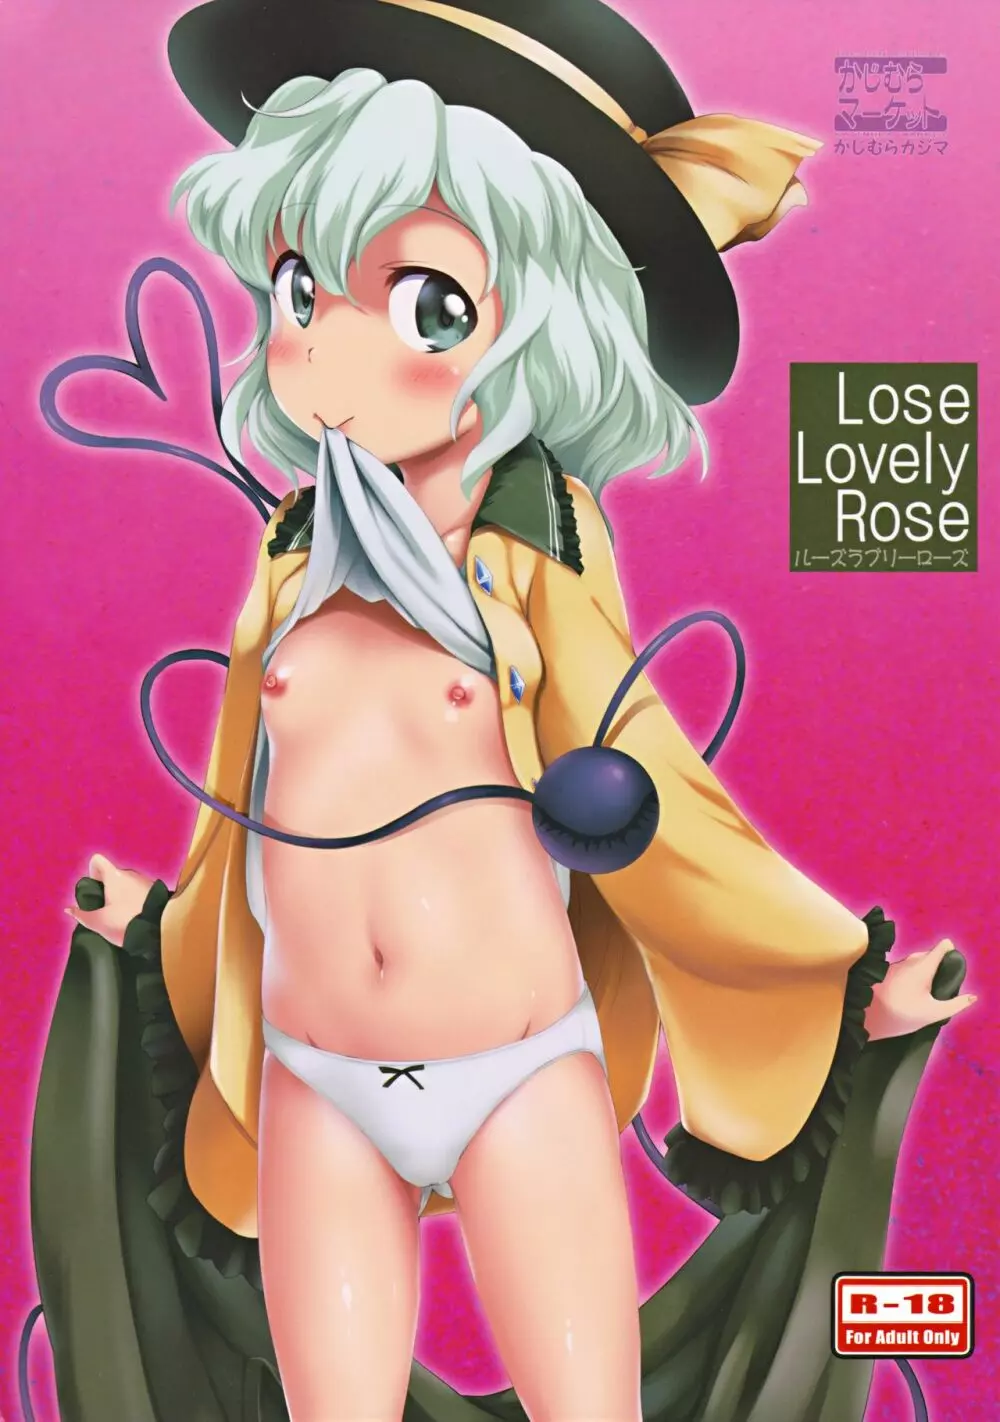 Lose Lovely Rose